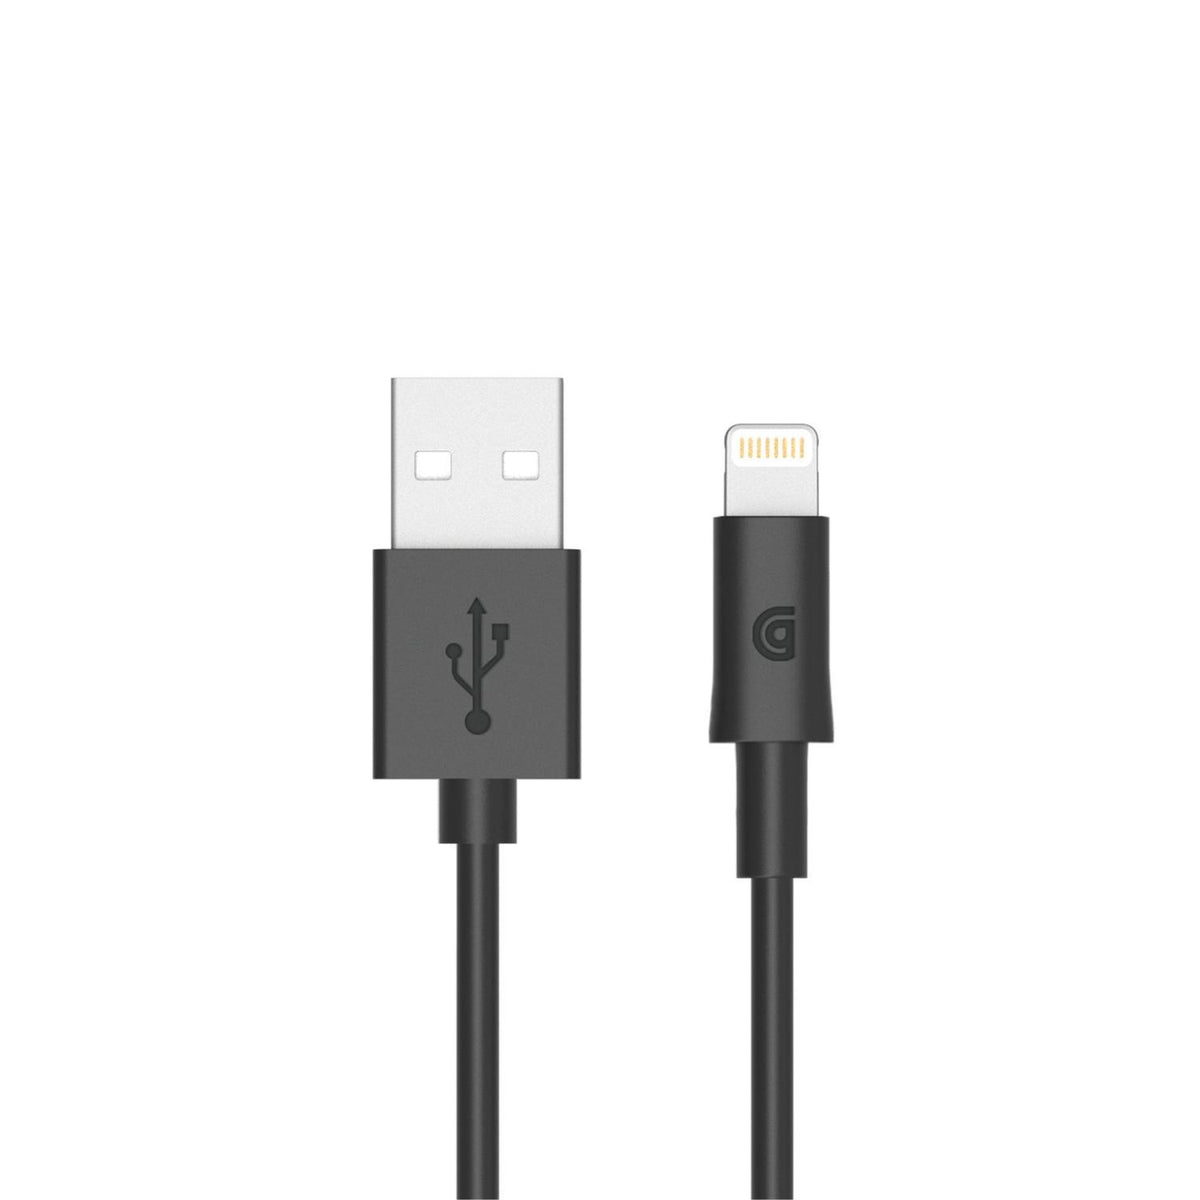 Griffin Cable De Usb-a A Lightning Cable USB-A a Lightning 91cm - vertikal